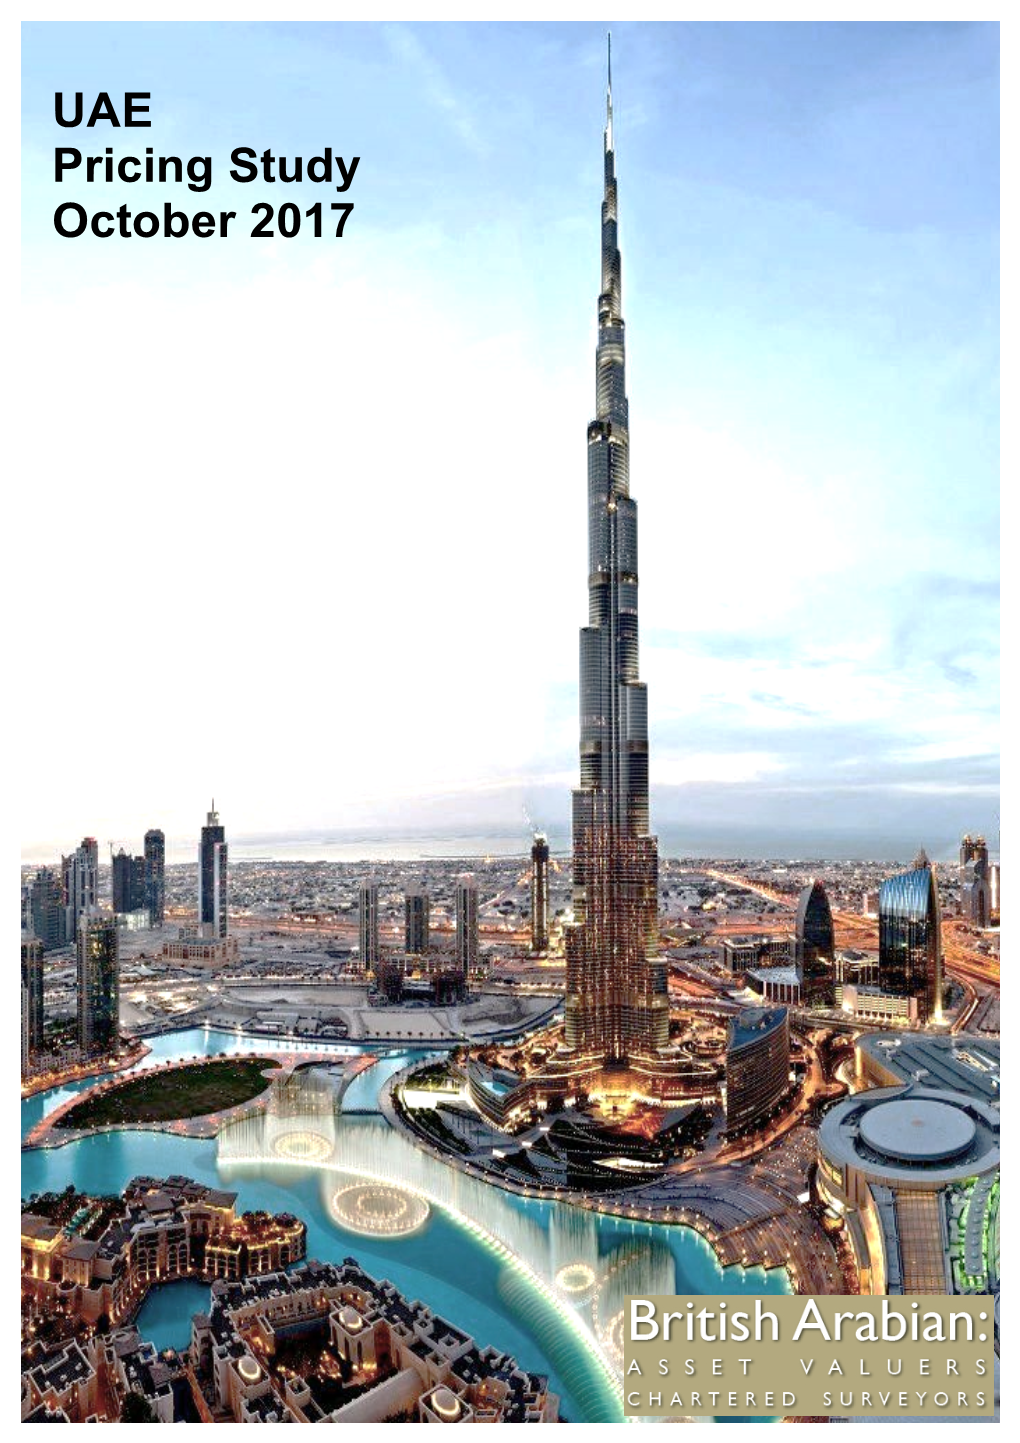 UAE Pricing Study October 2017